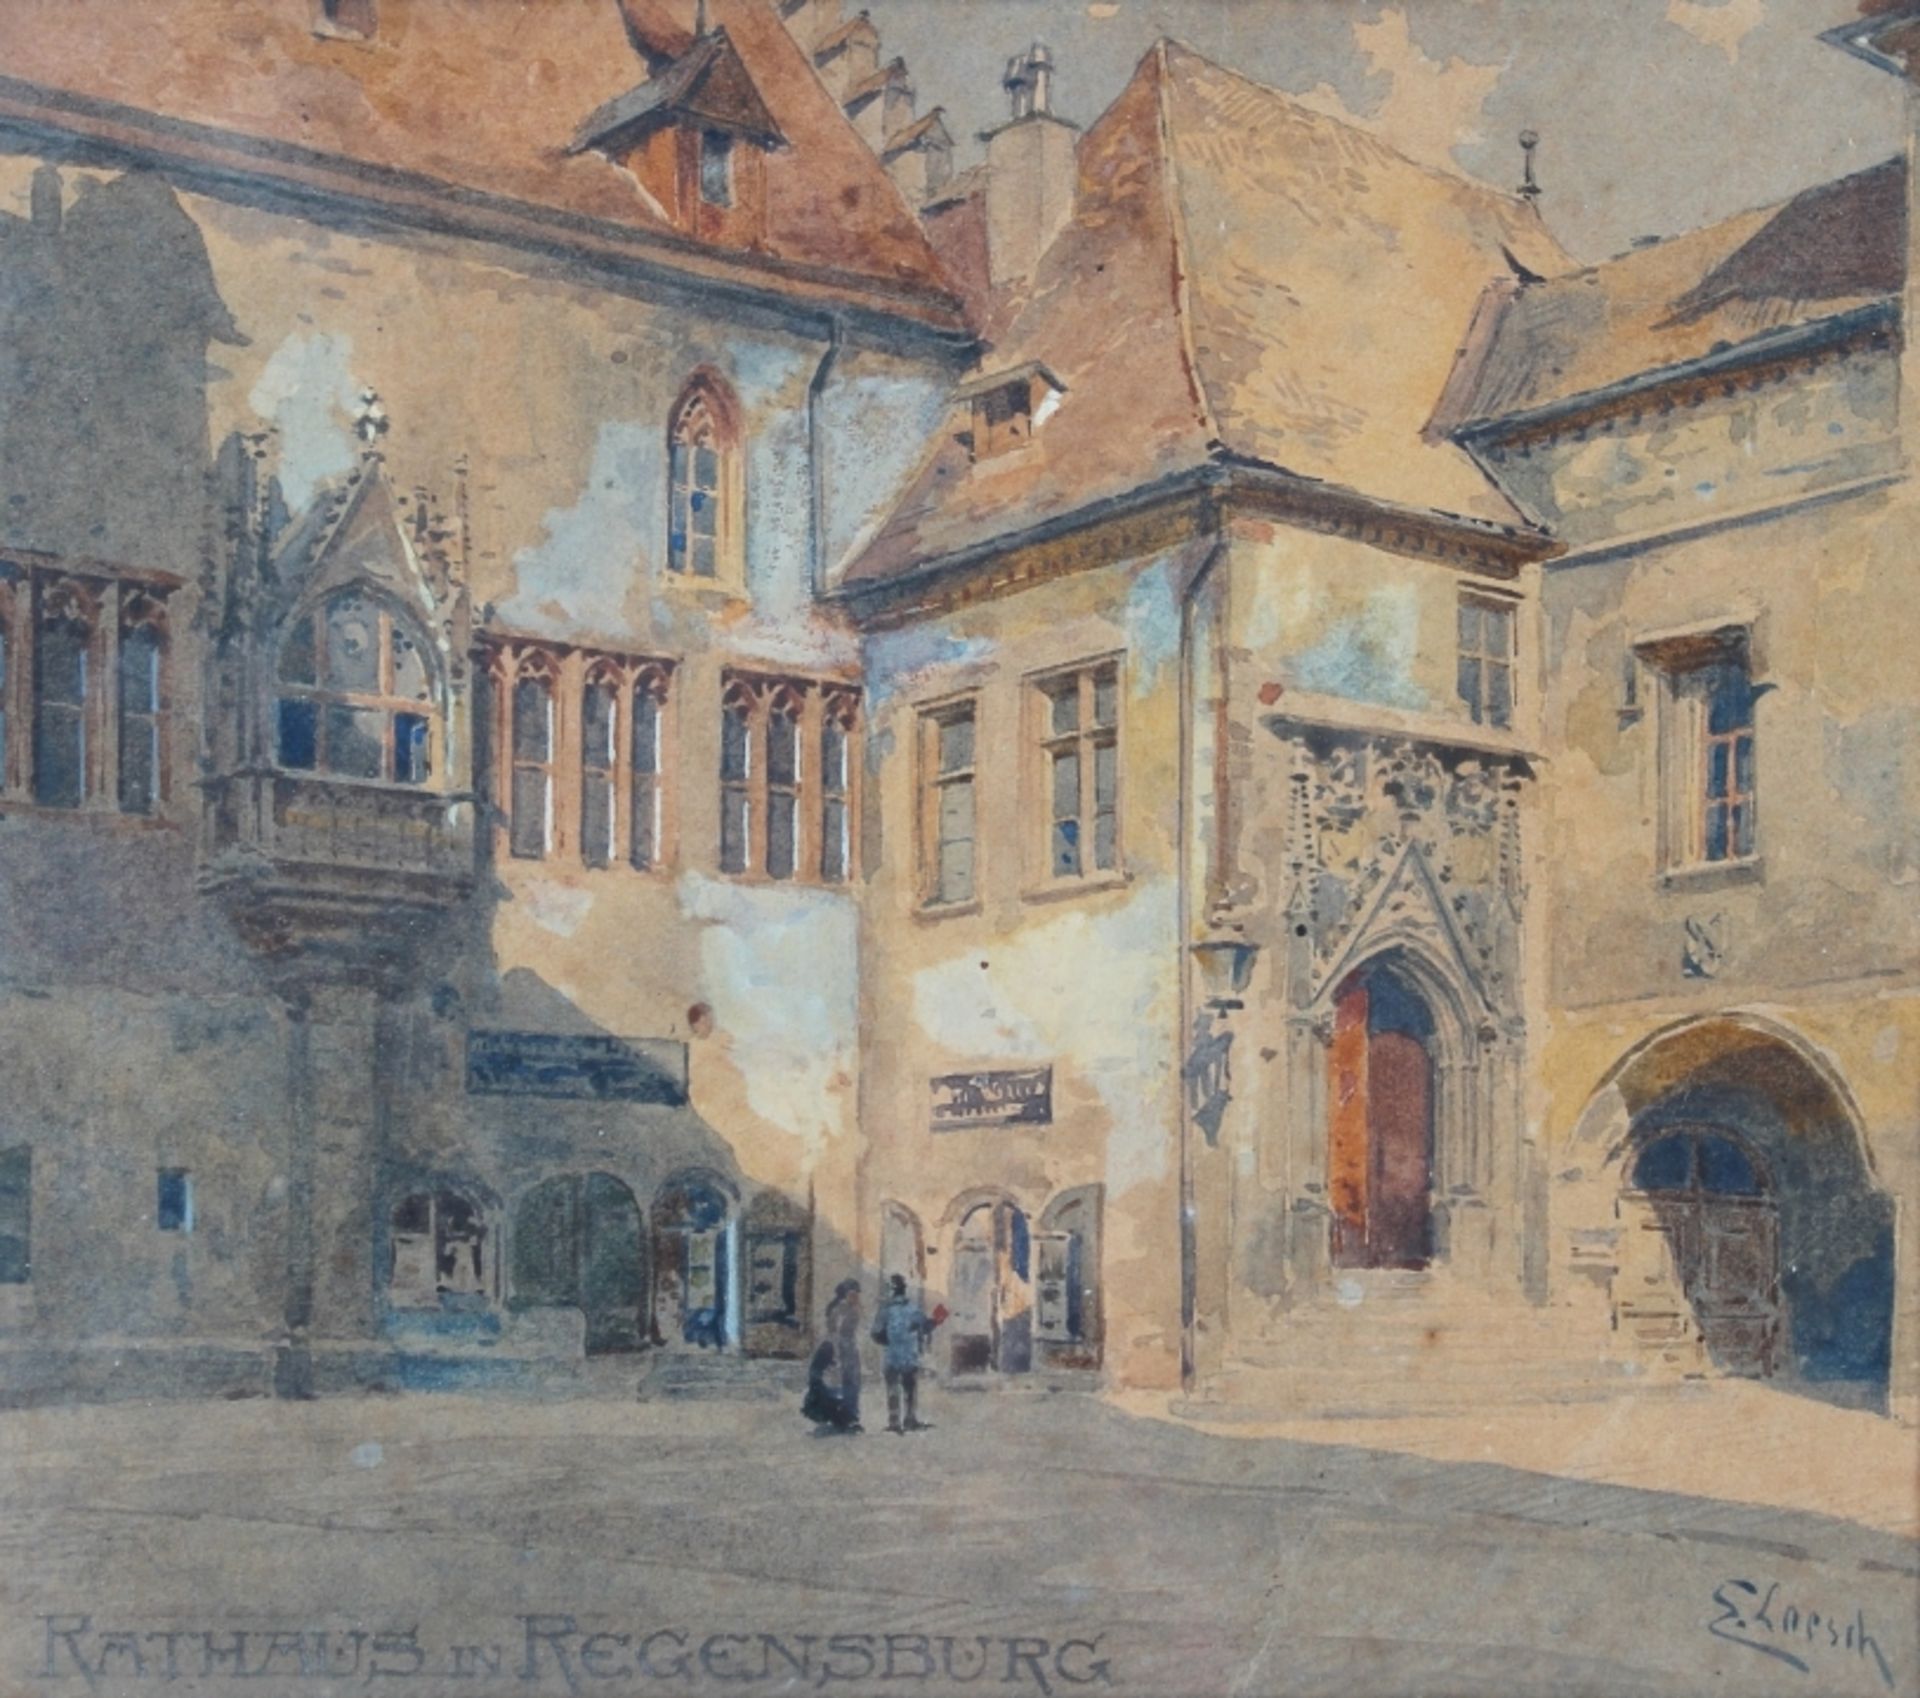 Aquarell - Ernst LOESCH (1860 Abtswind -1946 Dinkelsbühl) "Regensburg - Rathaus in Regensburg", r.u.